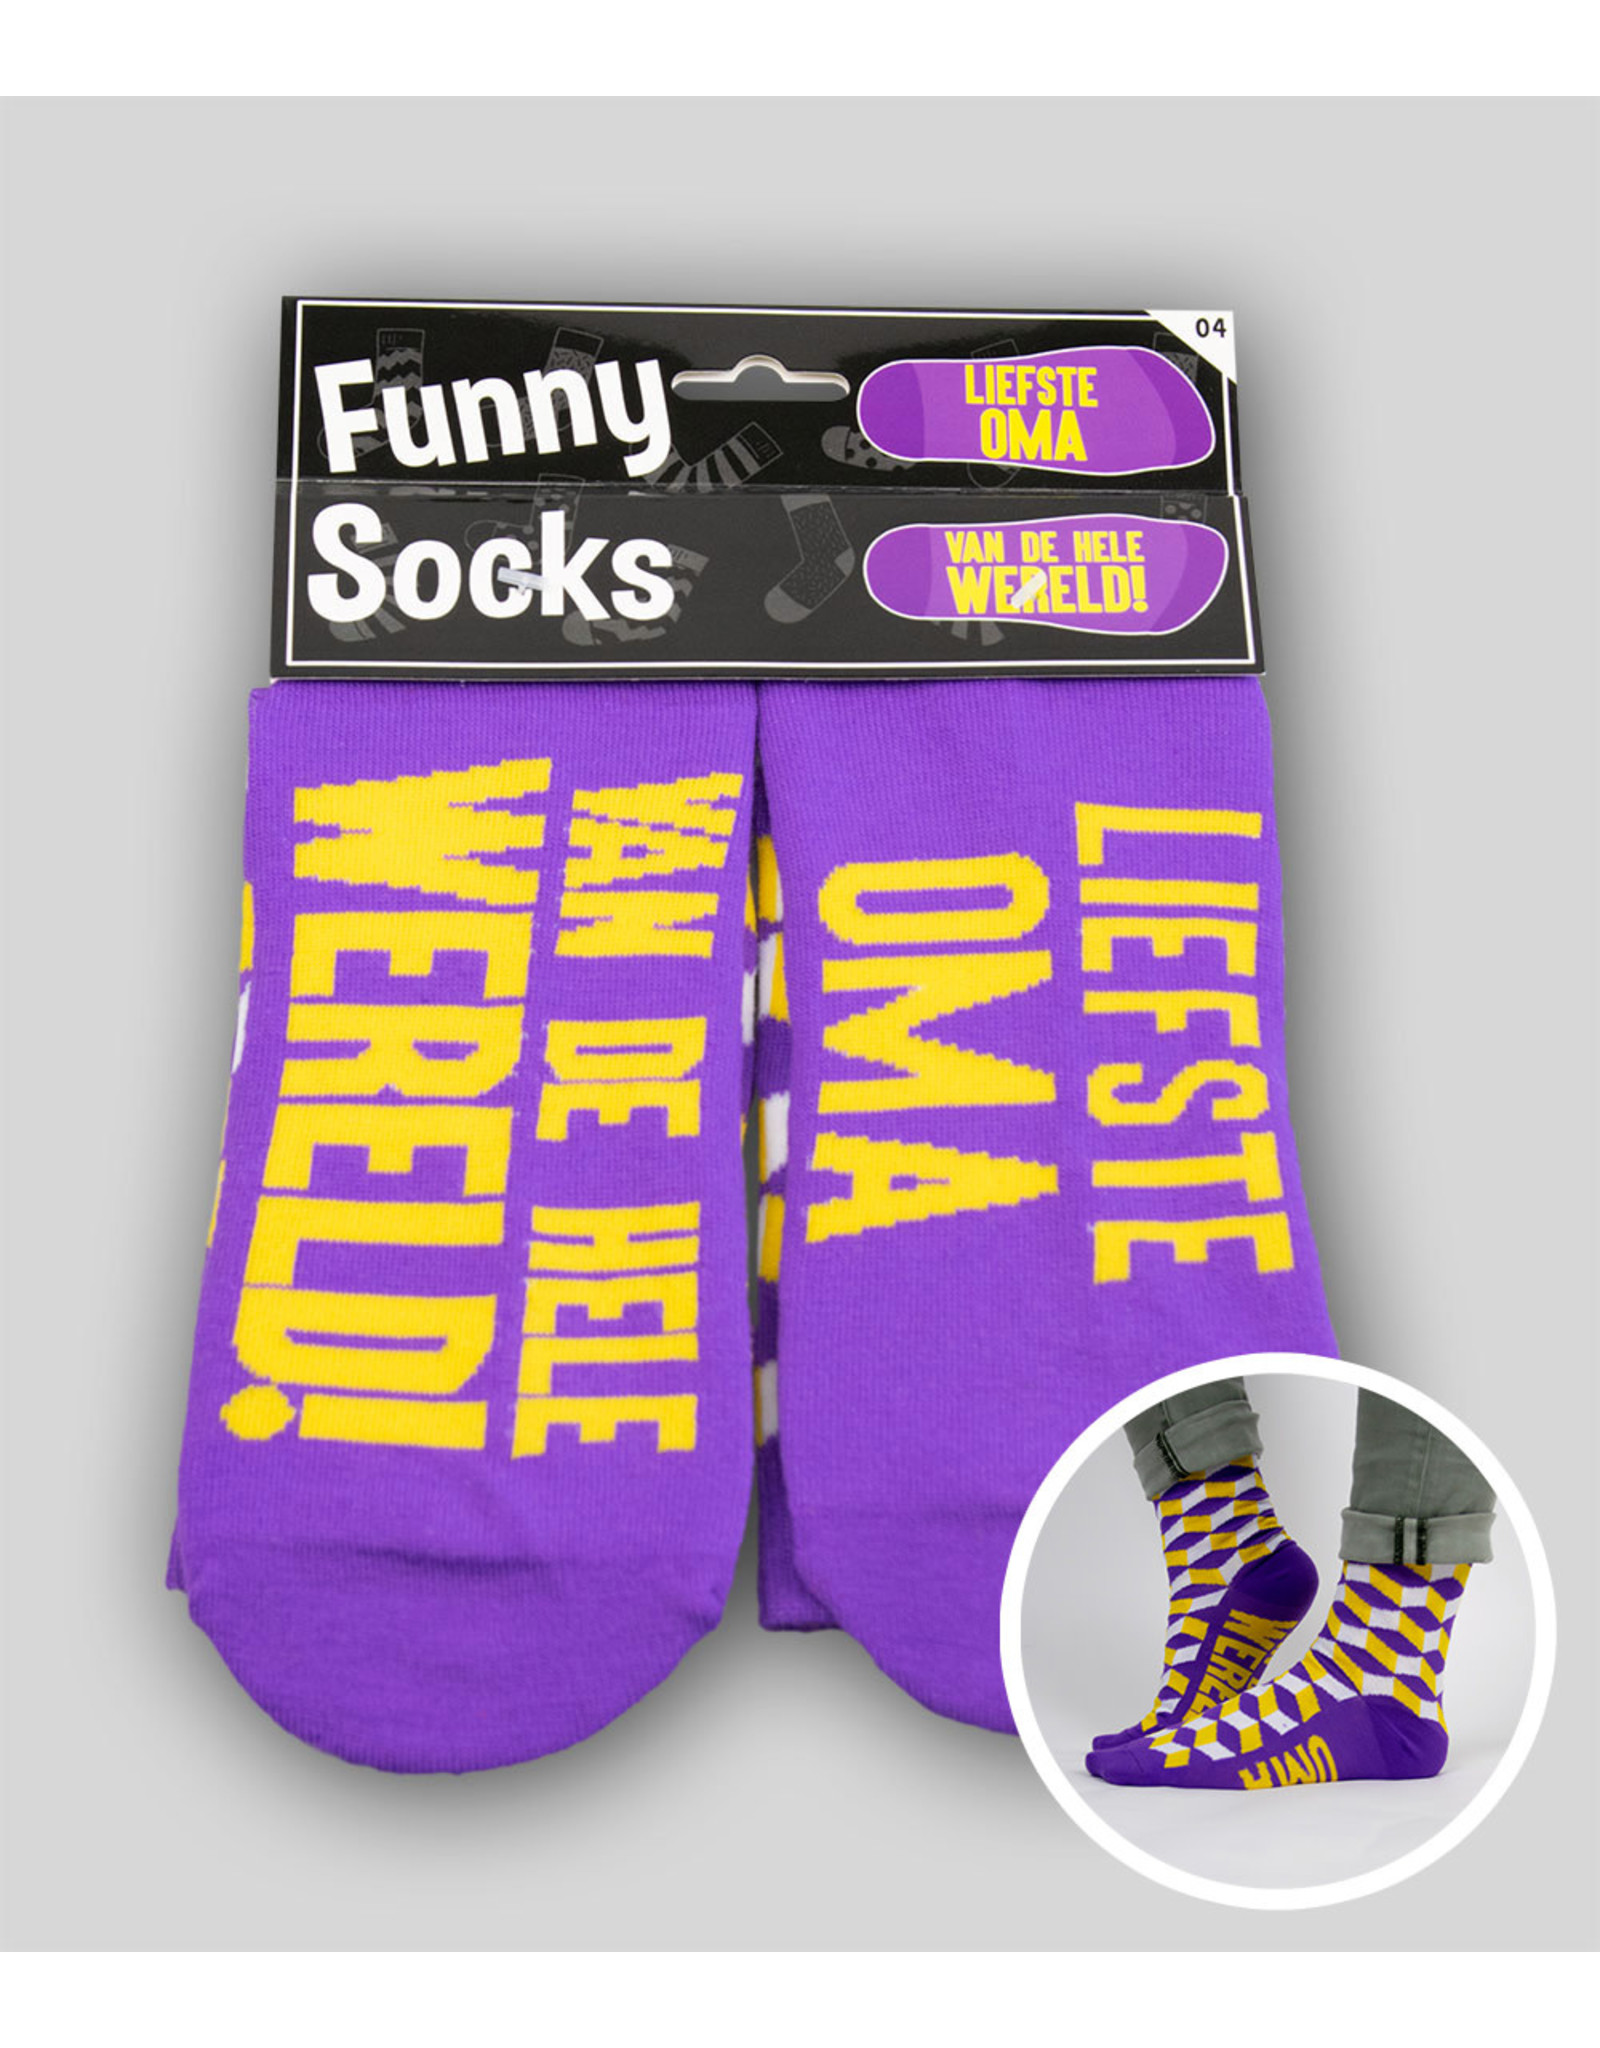 Funny Socks - Liefste Oma